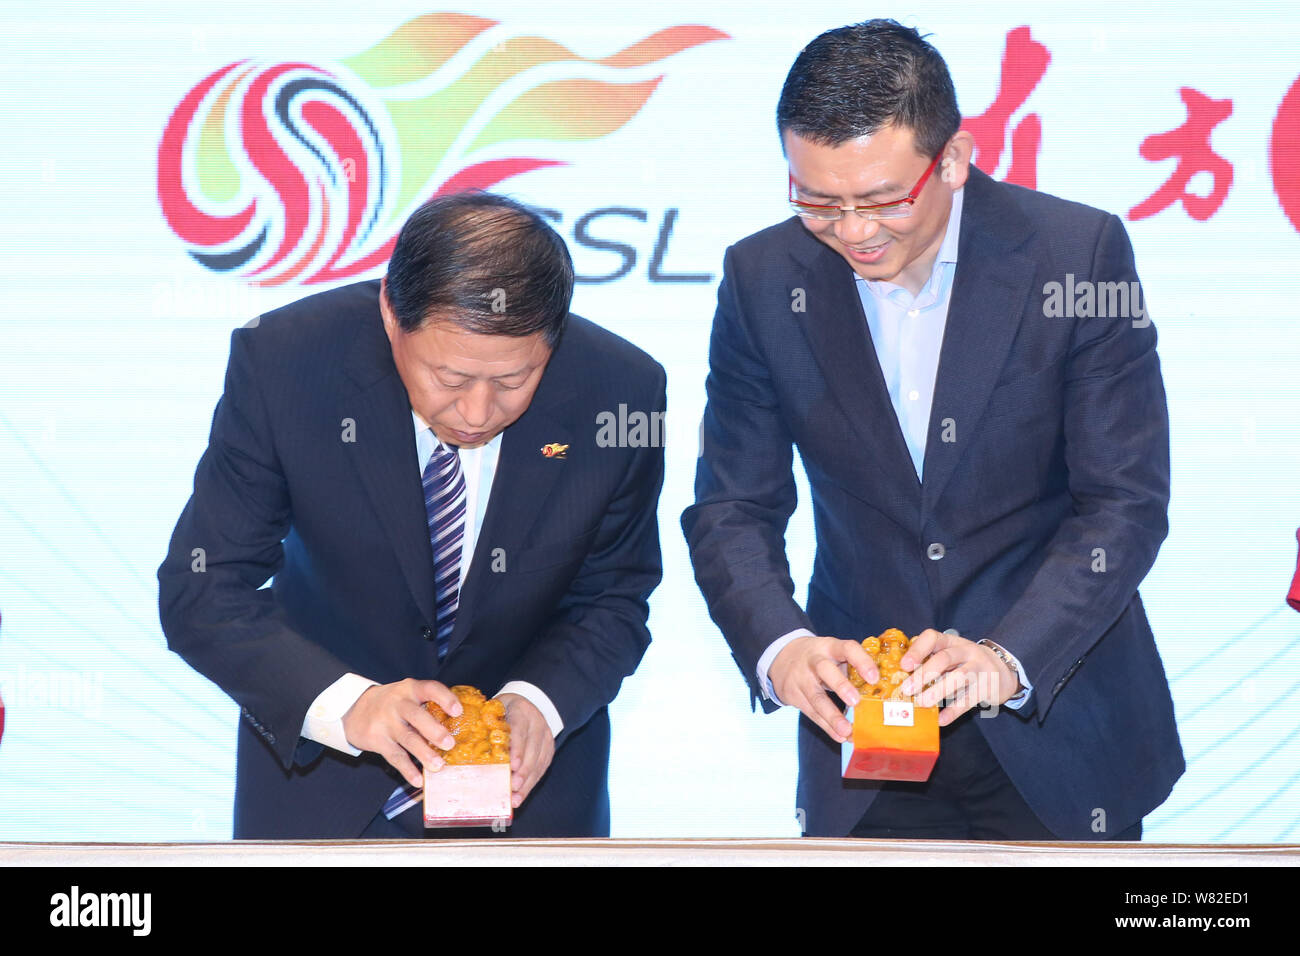 Ma Chengquan, izquierda, presidente de la Chinese Super League (CSL), Zan Kuang Zhanyu, derecha, CEO de Imaginechina, sellos sellos durante una ceremonia de firma a Ann Foto de stock